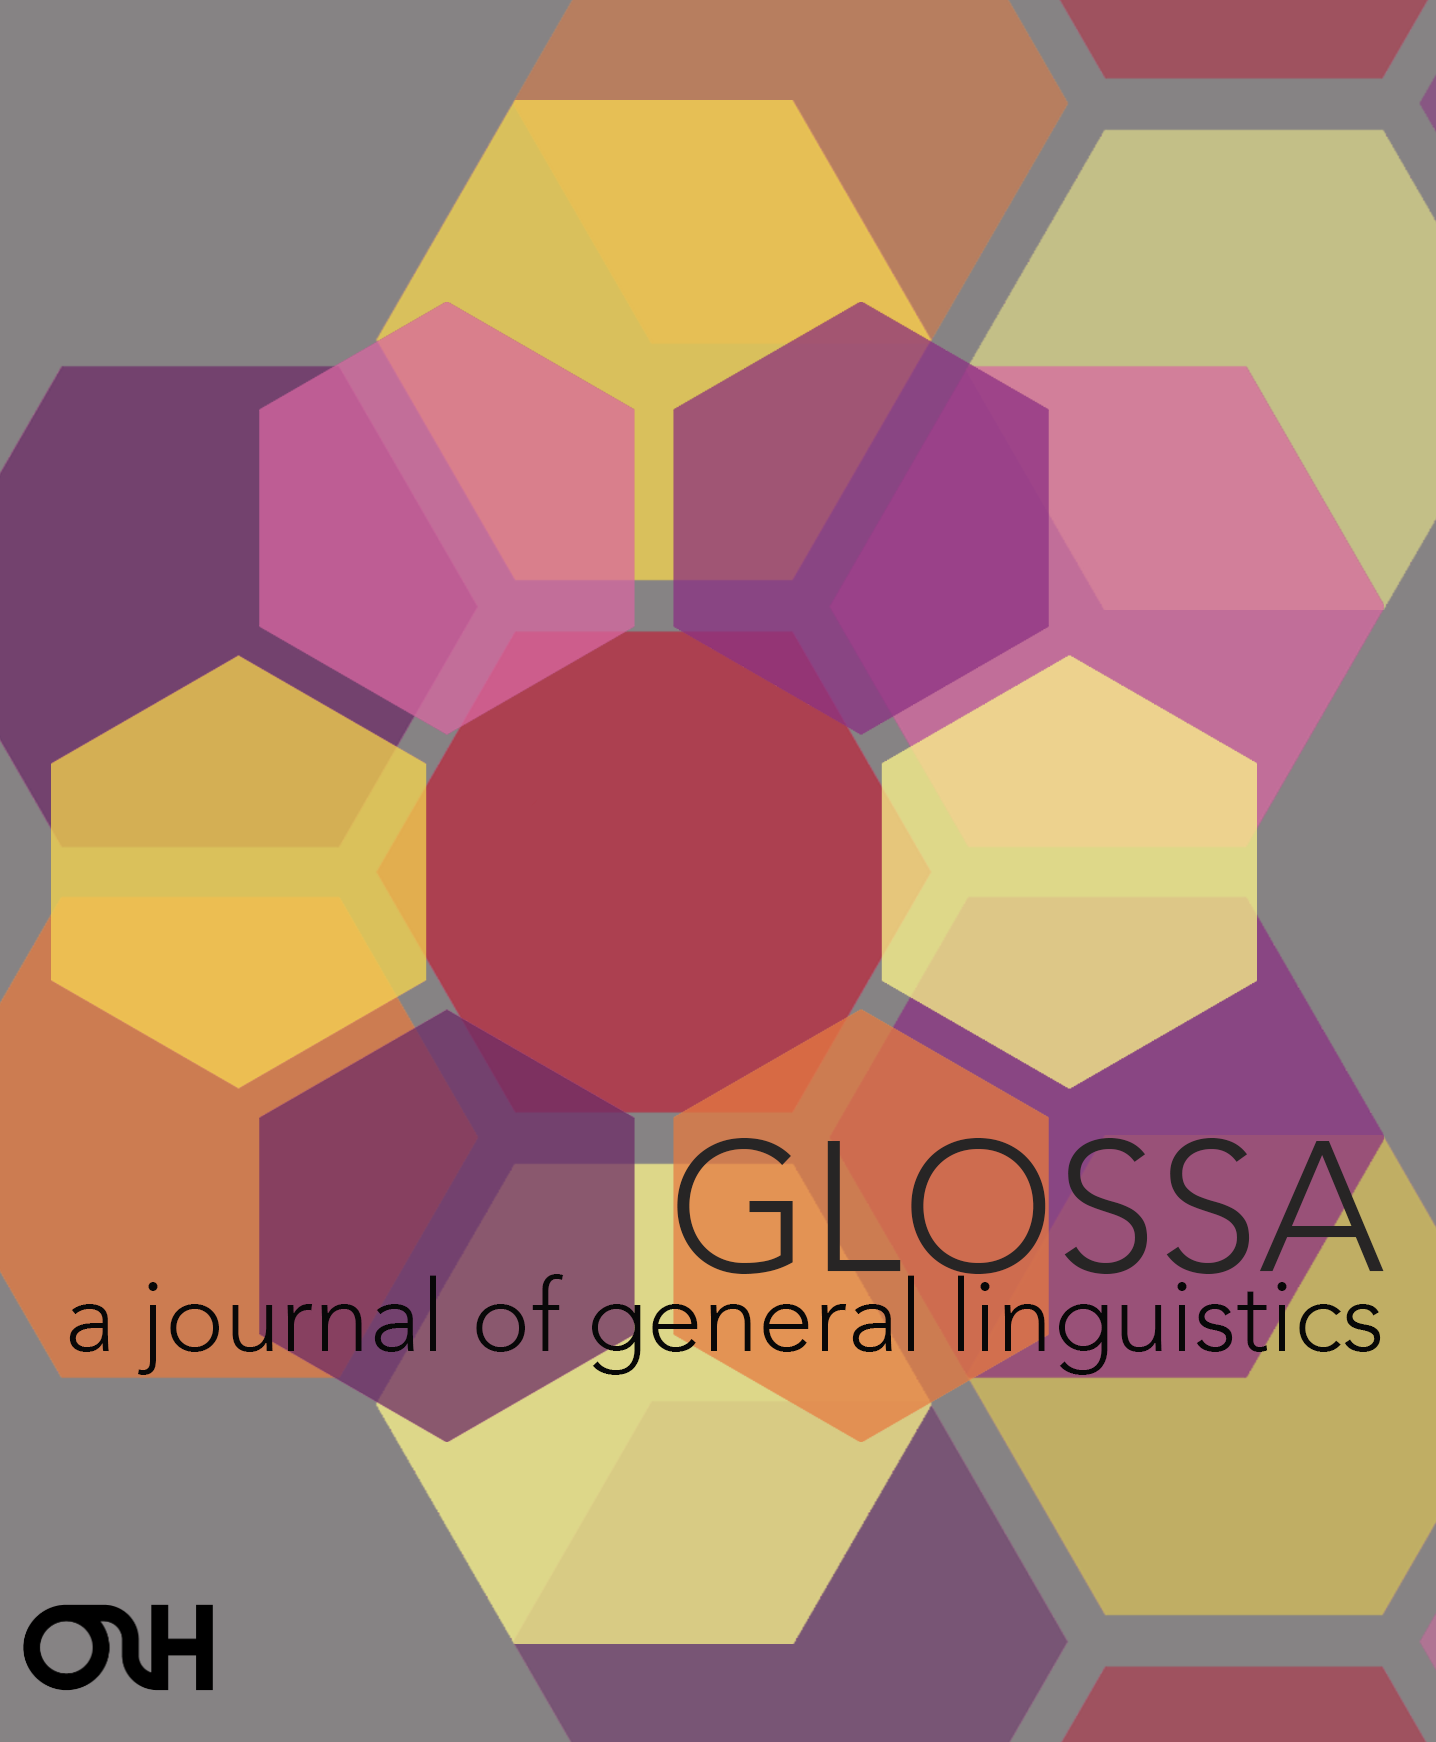 Glossa: a journal of general linguistics